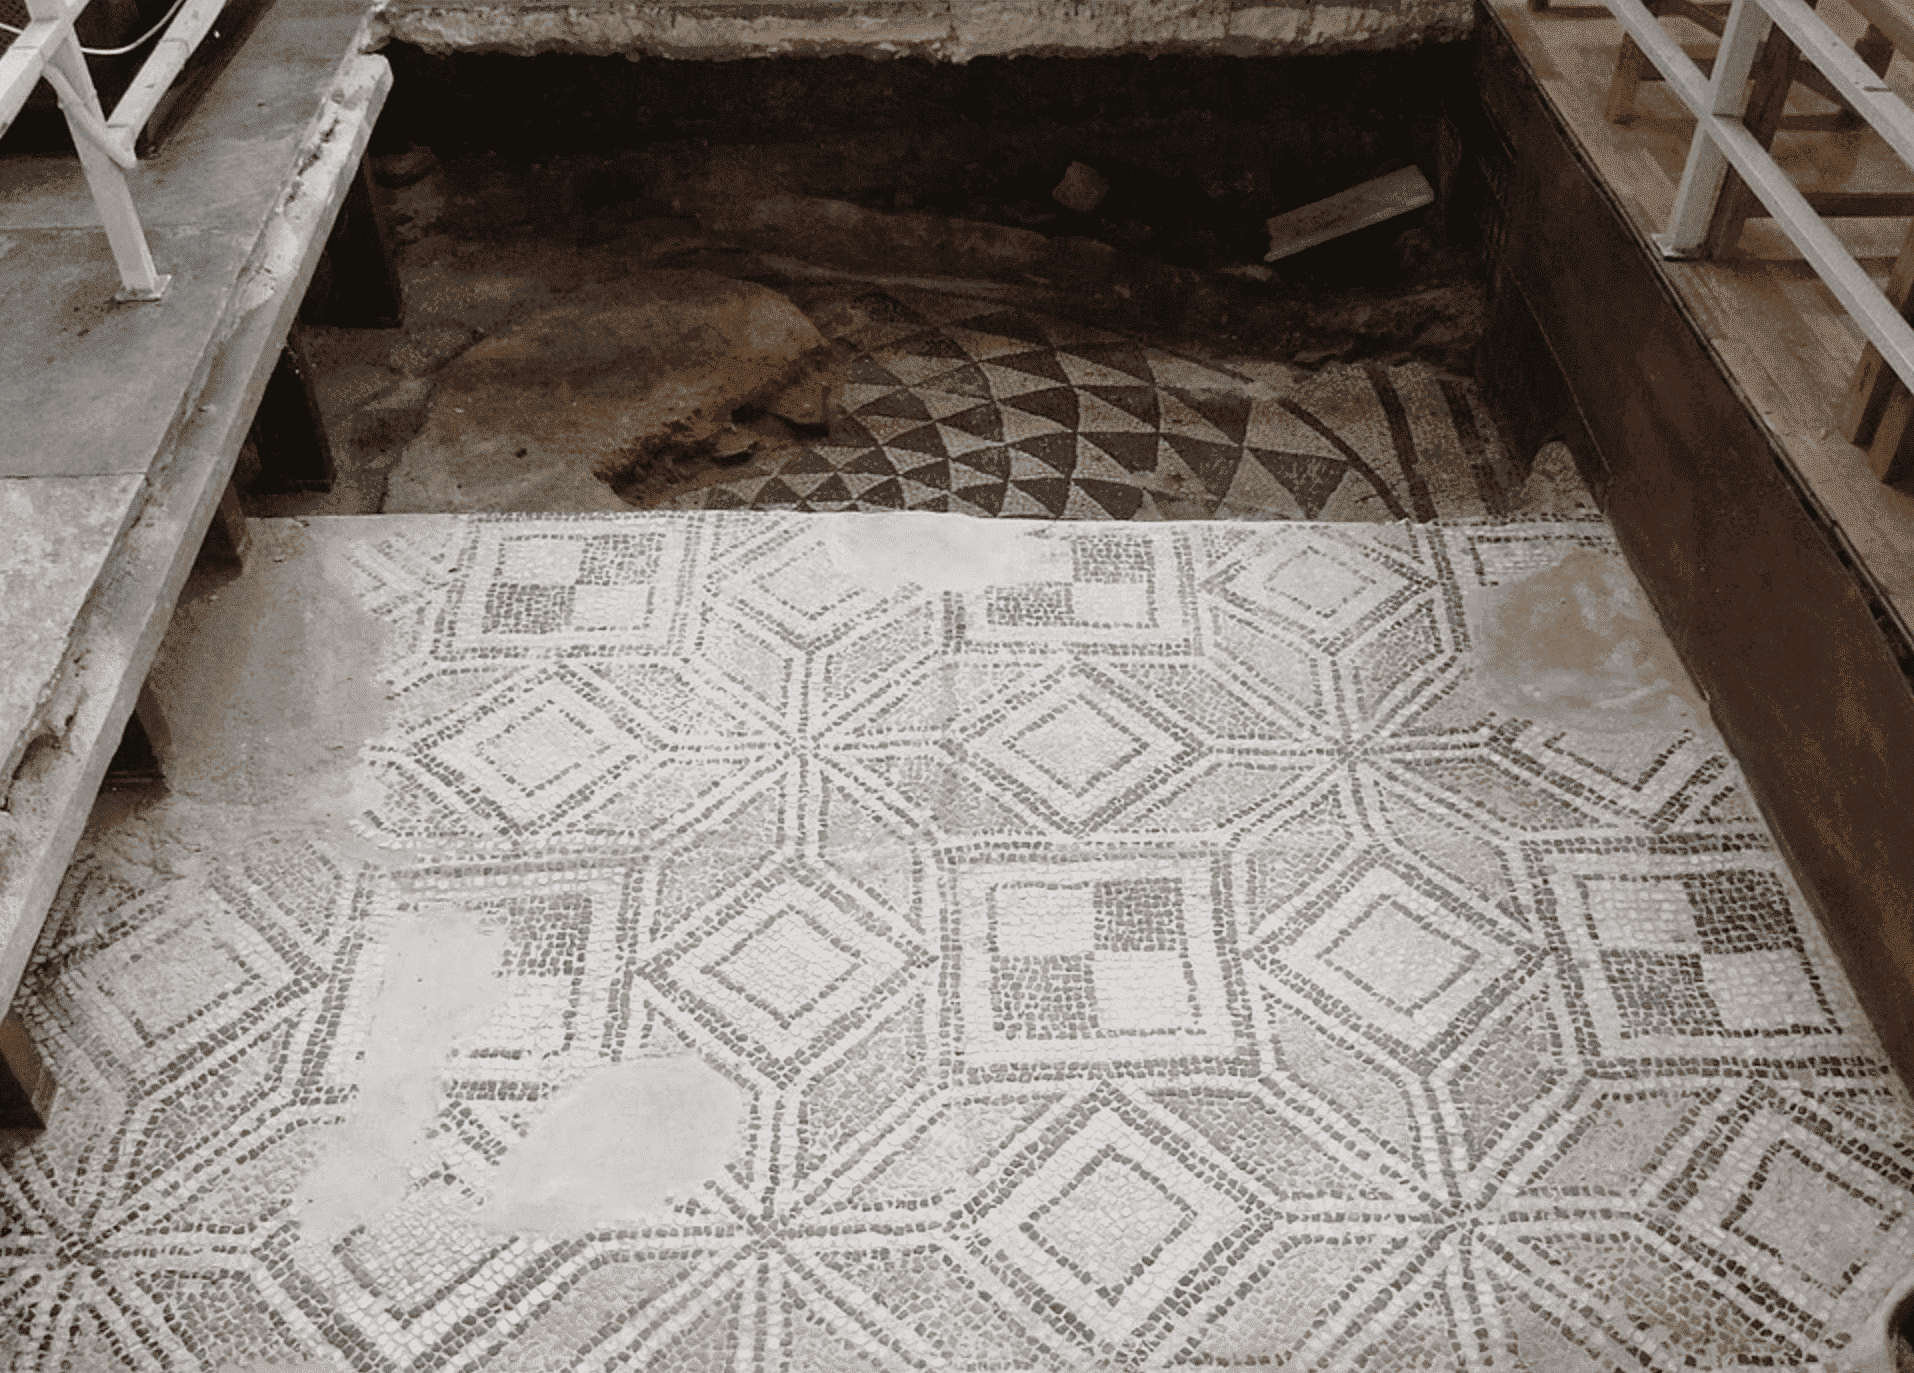 Arqueologos encuentran tumba de santa claus